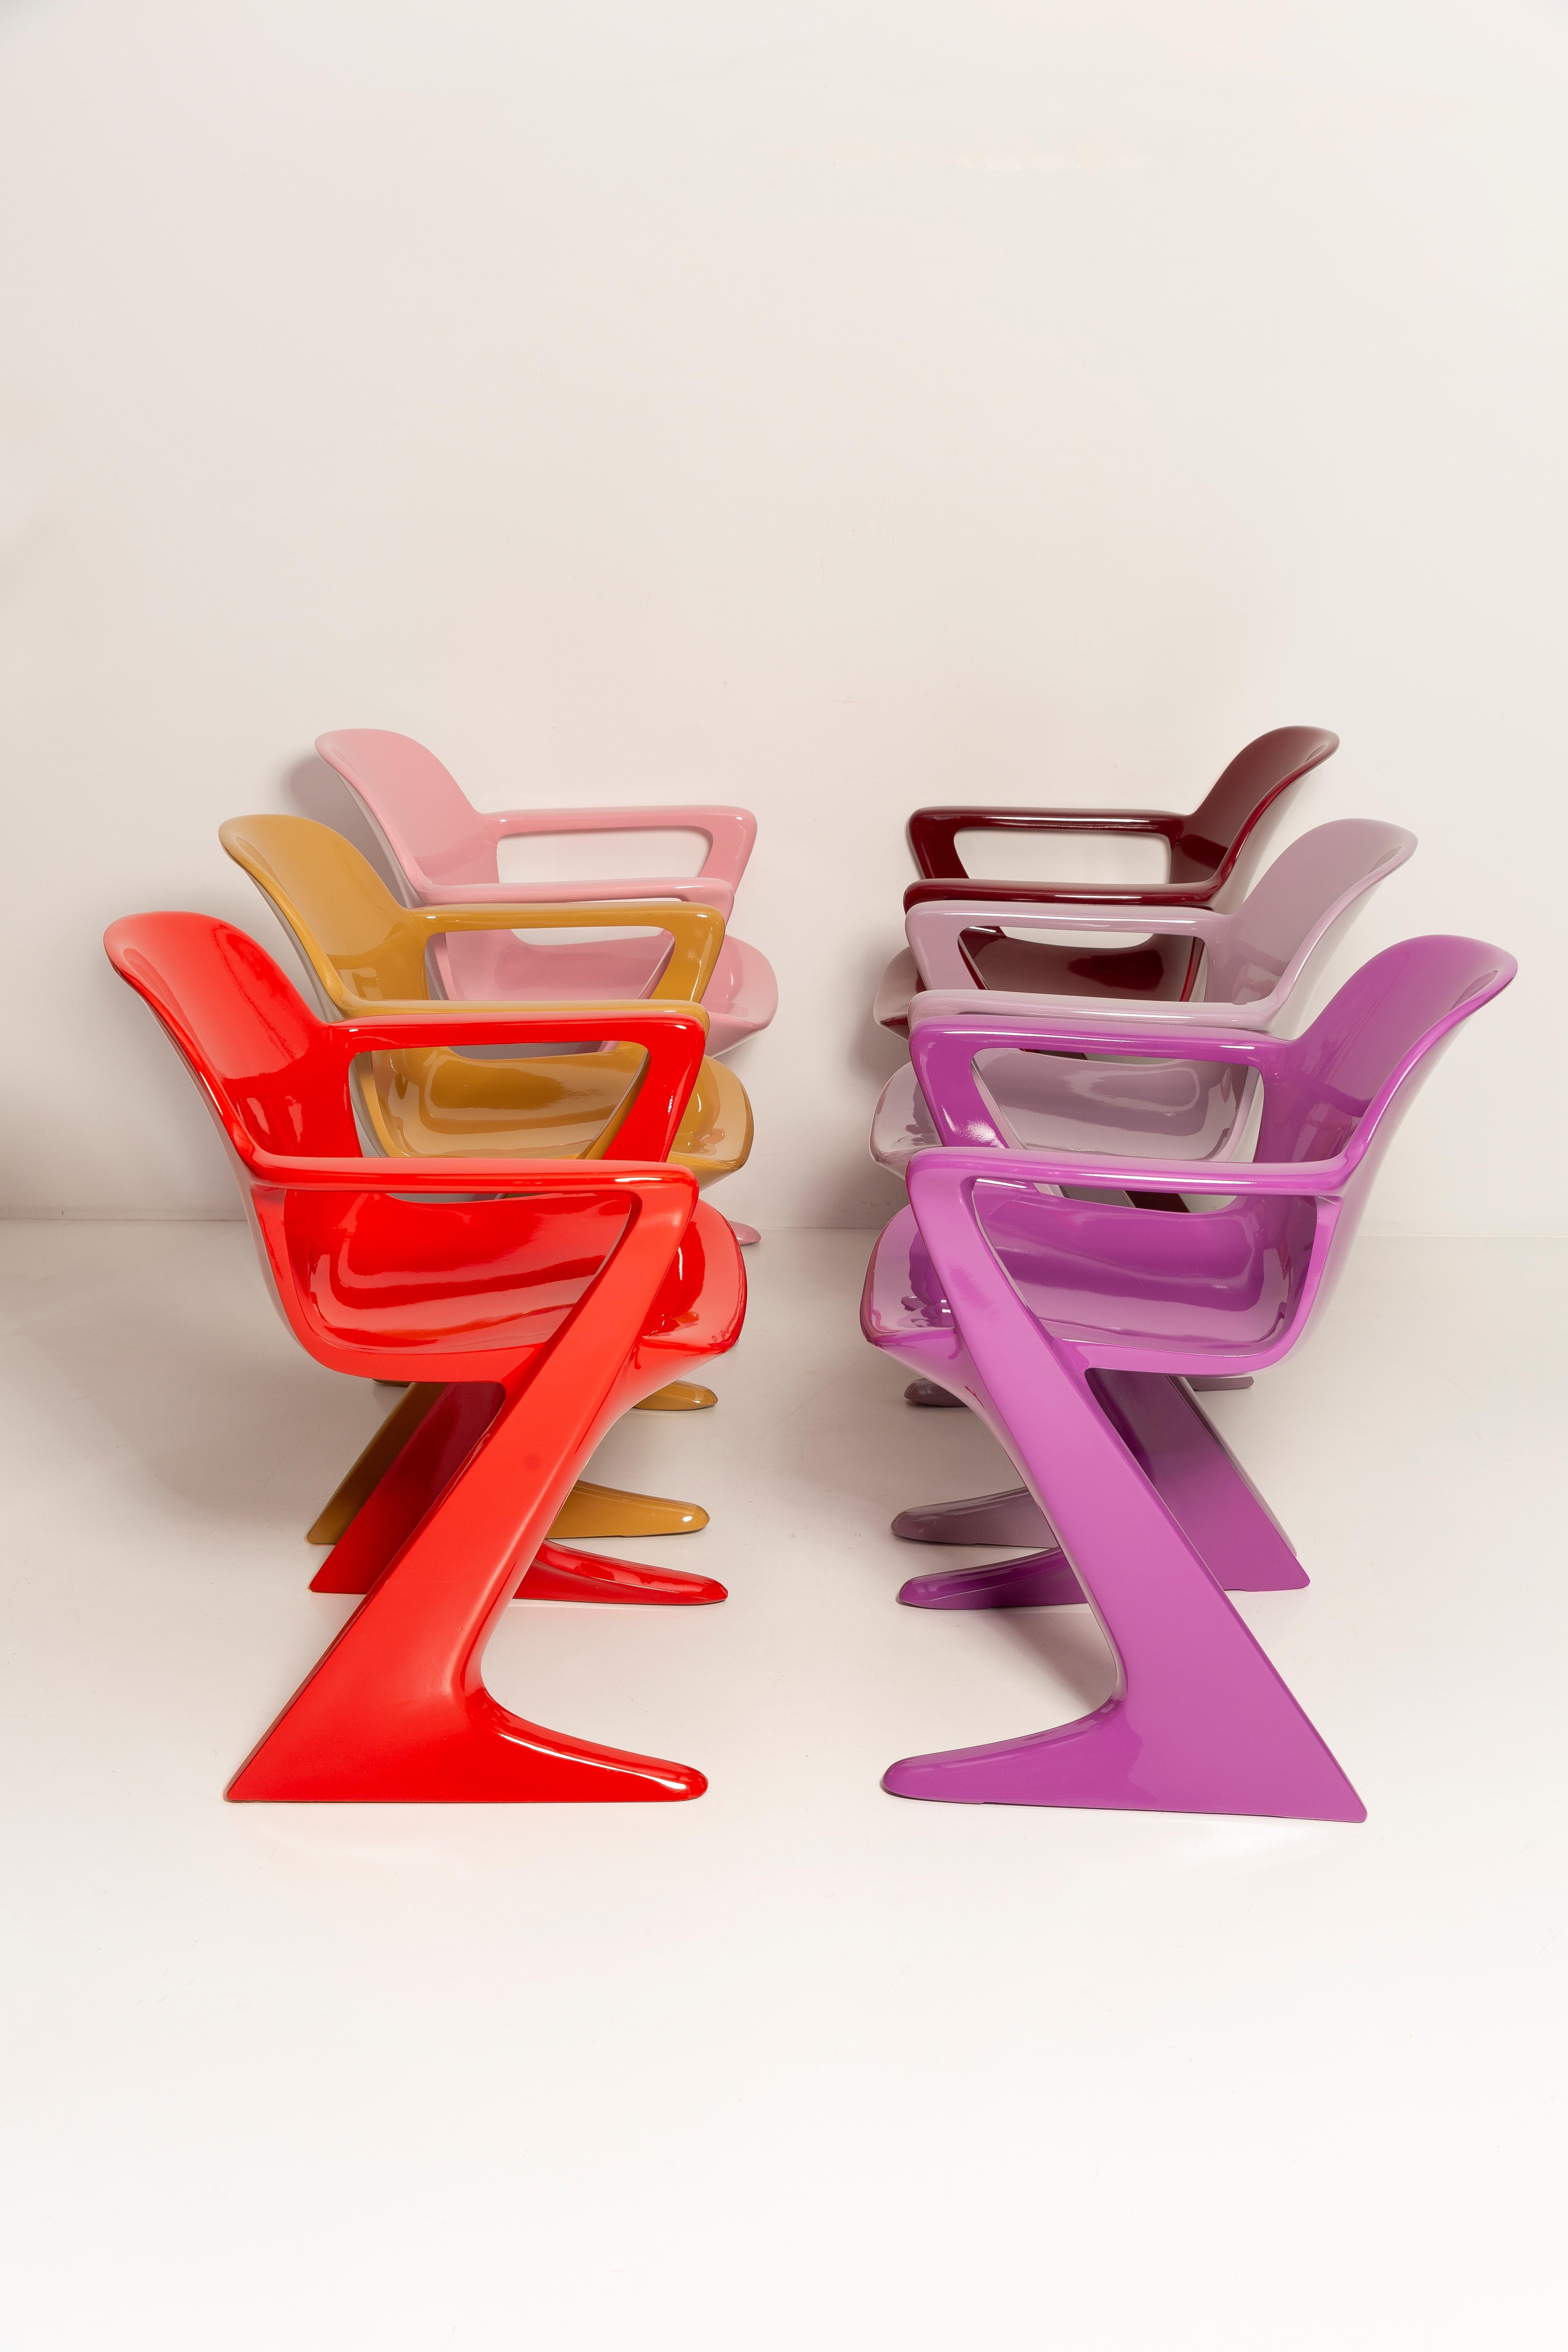 Fiberglass Set of Three Mid Century Kangaroo Chairs, Ernst Moeckl, Germany, 1968 For Sale